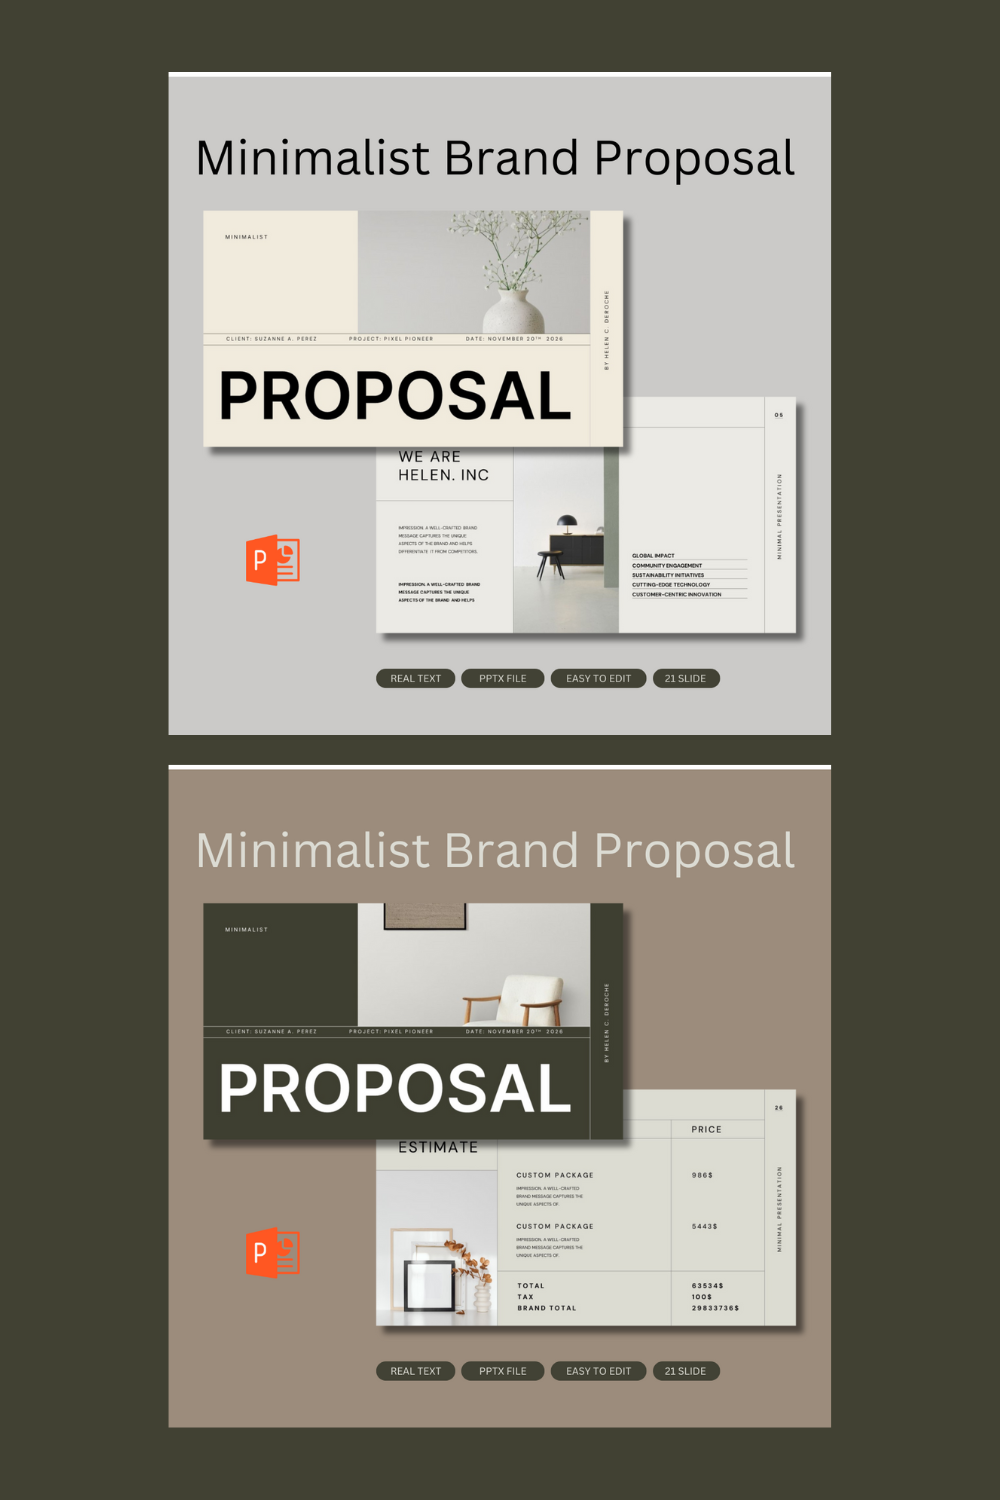 Minimalist Brand Proposal pinterest preview image.